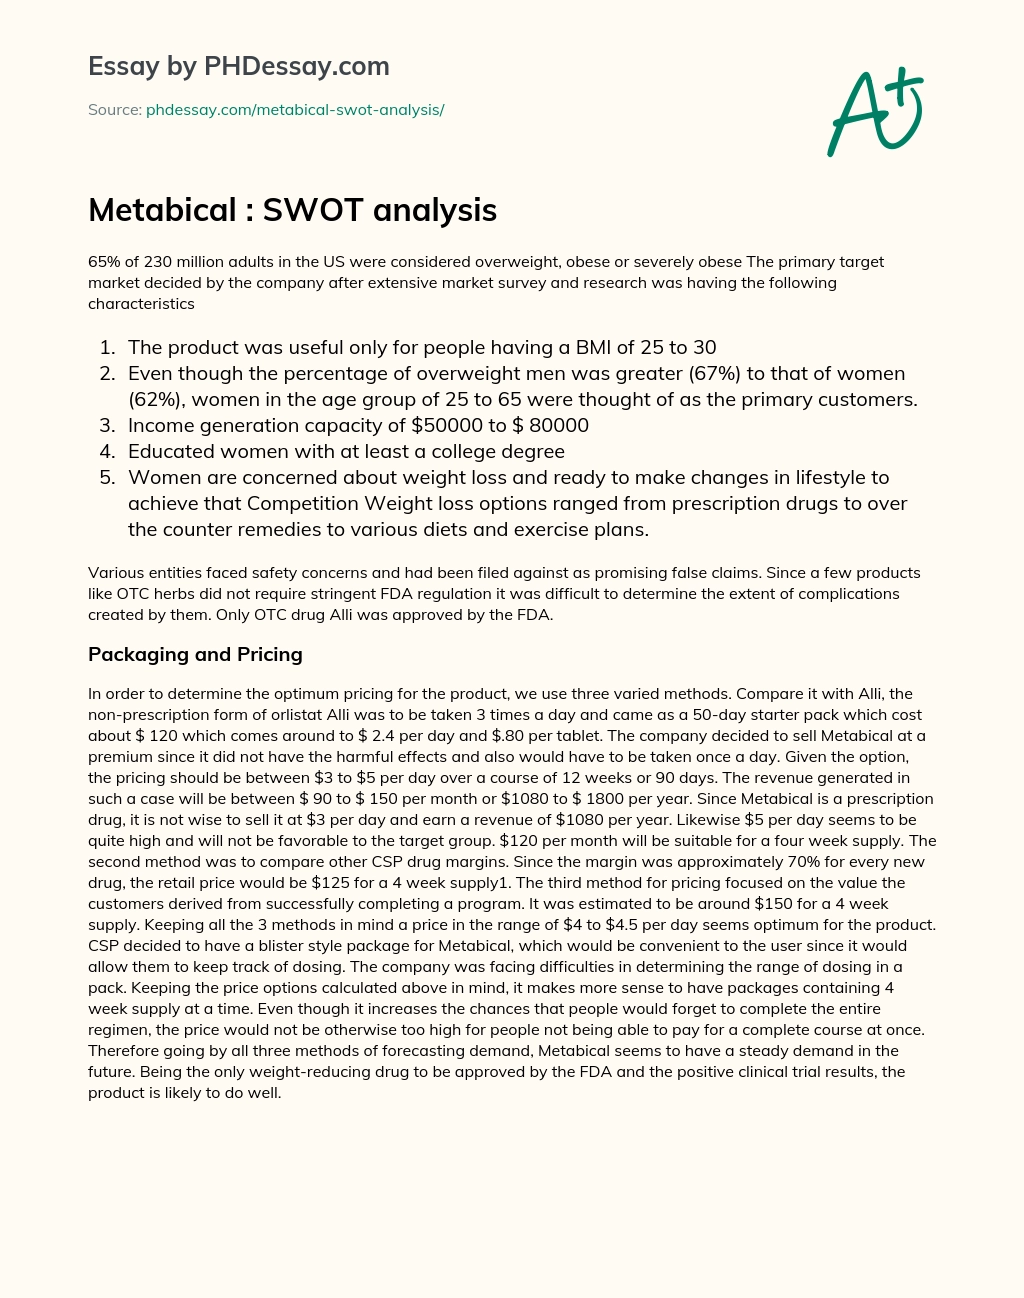 Metabical : SWOT analysis essay